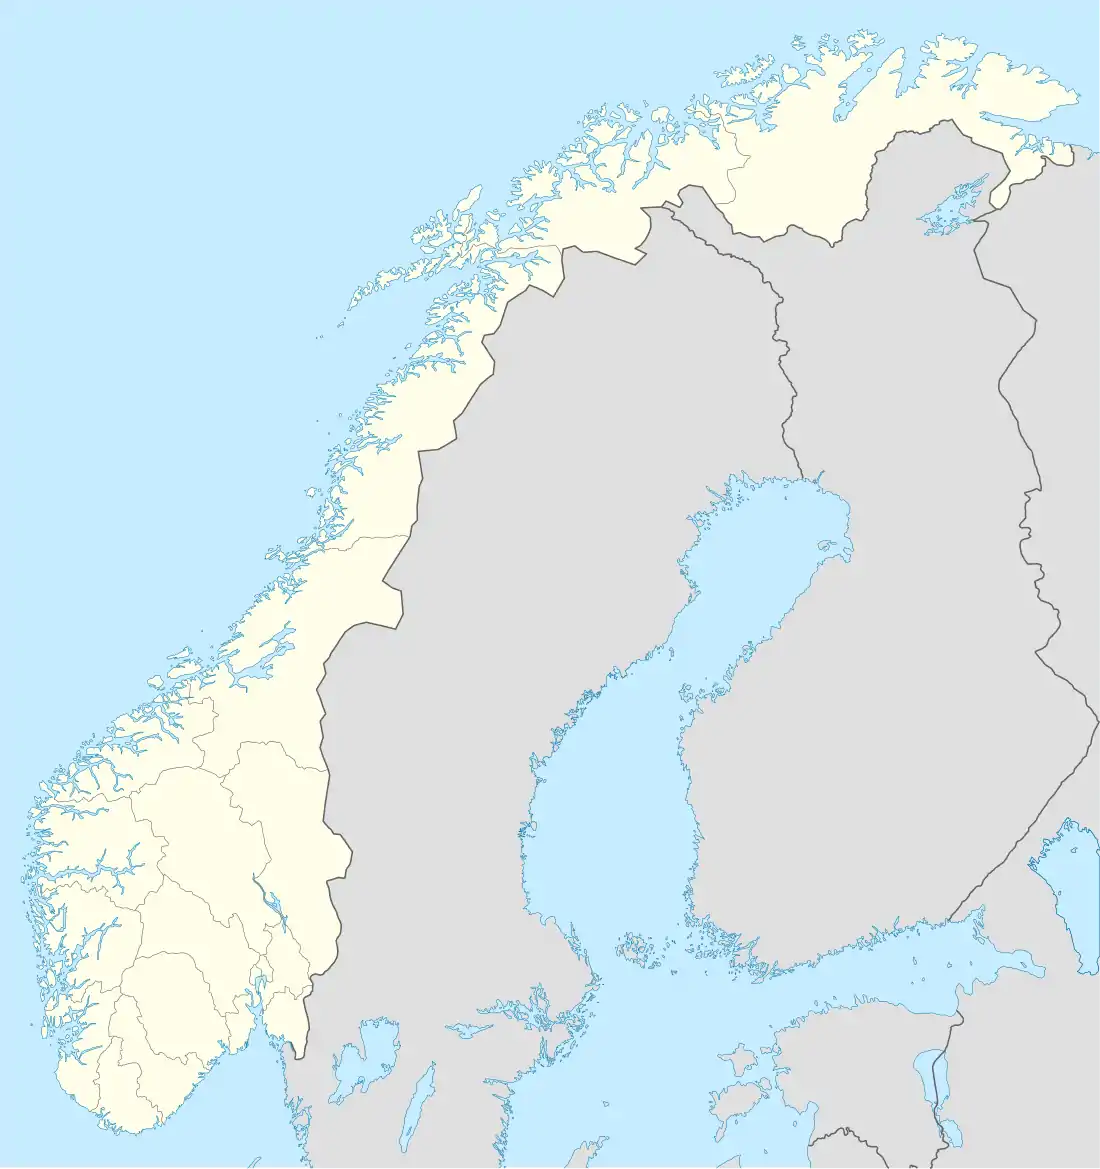 Tylldalen is located in Norway